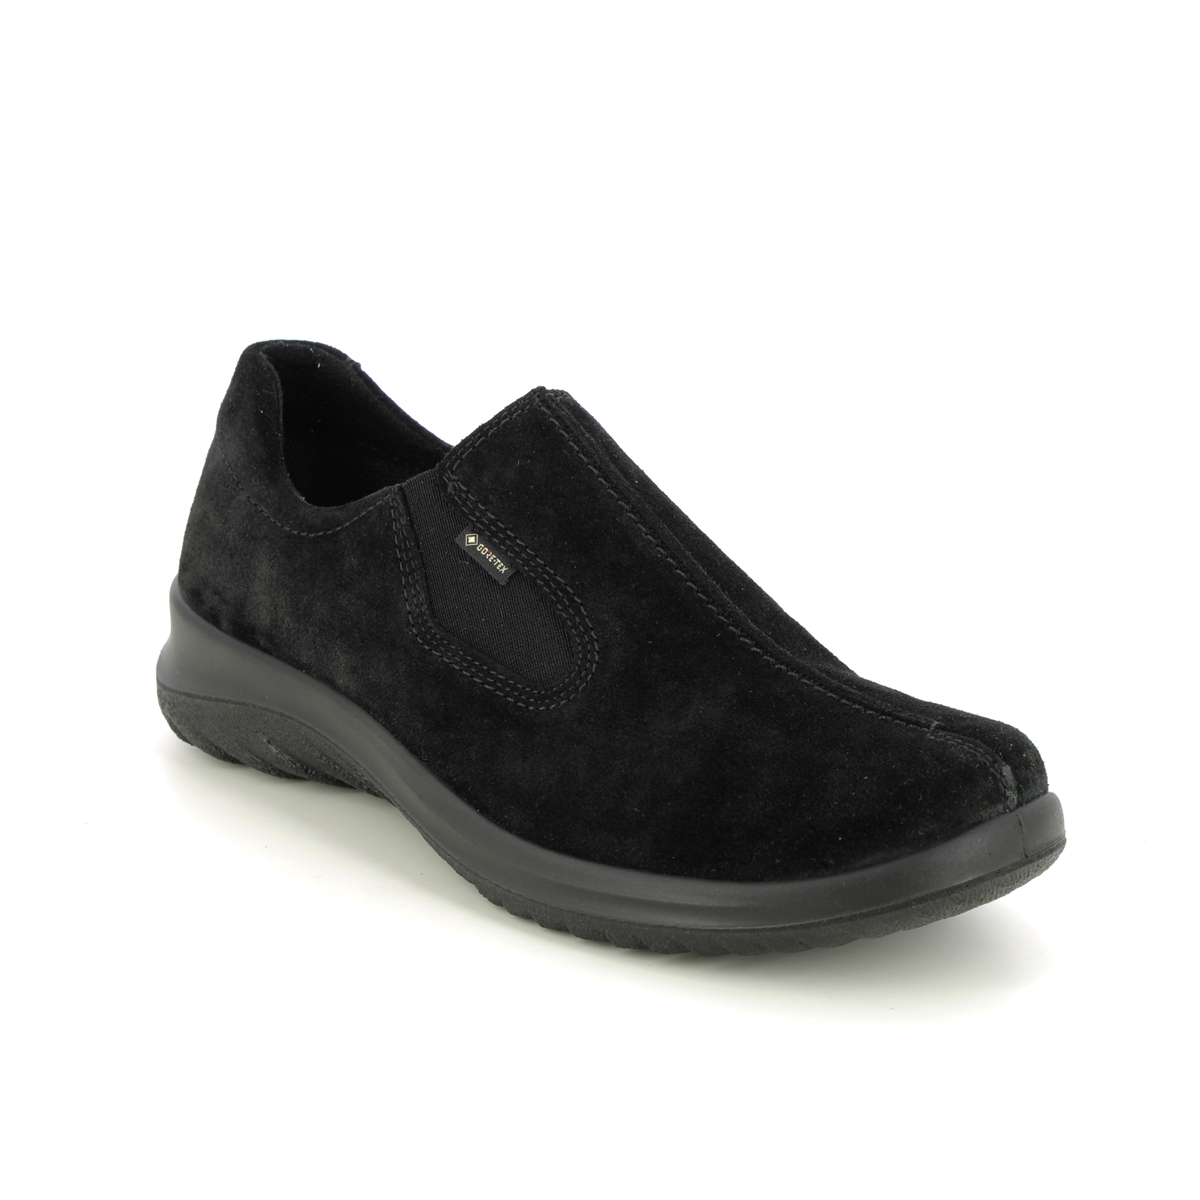 Legero Soft Shoe Gtx Black Suede Womens Comfort Slip On Shoes 2009568-0000 In Size 7 In Plain Black Suede